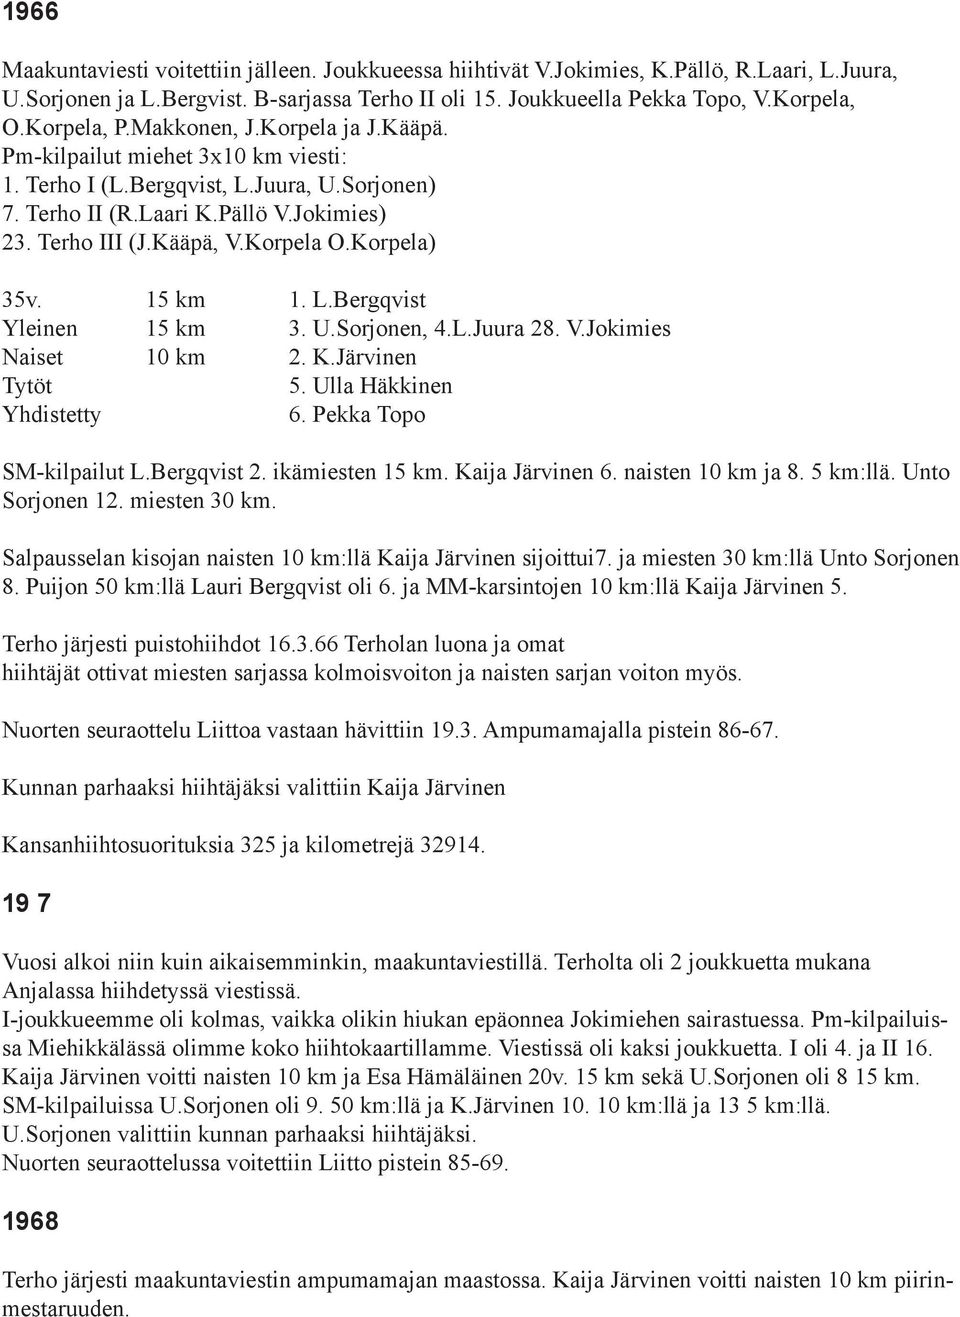 Korpela O.Korpela) 35v. 15 km 1. L.Bergqvist Yleinen 15 km 3. U.Sorjonen, 4.L.Juura 28. V.Jokimies Naiset 10 km 2. K.Järvinen Tytöt 5. Ulla Häkkinen Yhdistetty 6. Pekka Topo SM-kilpailut L.